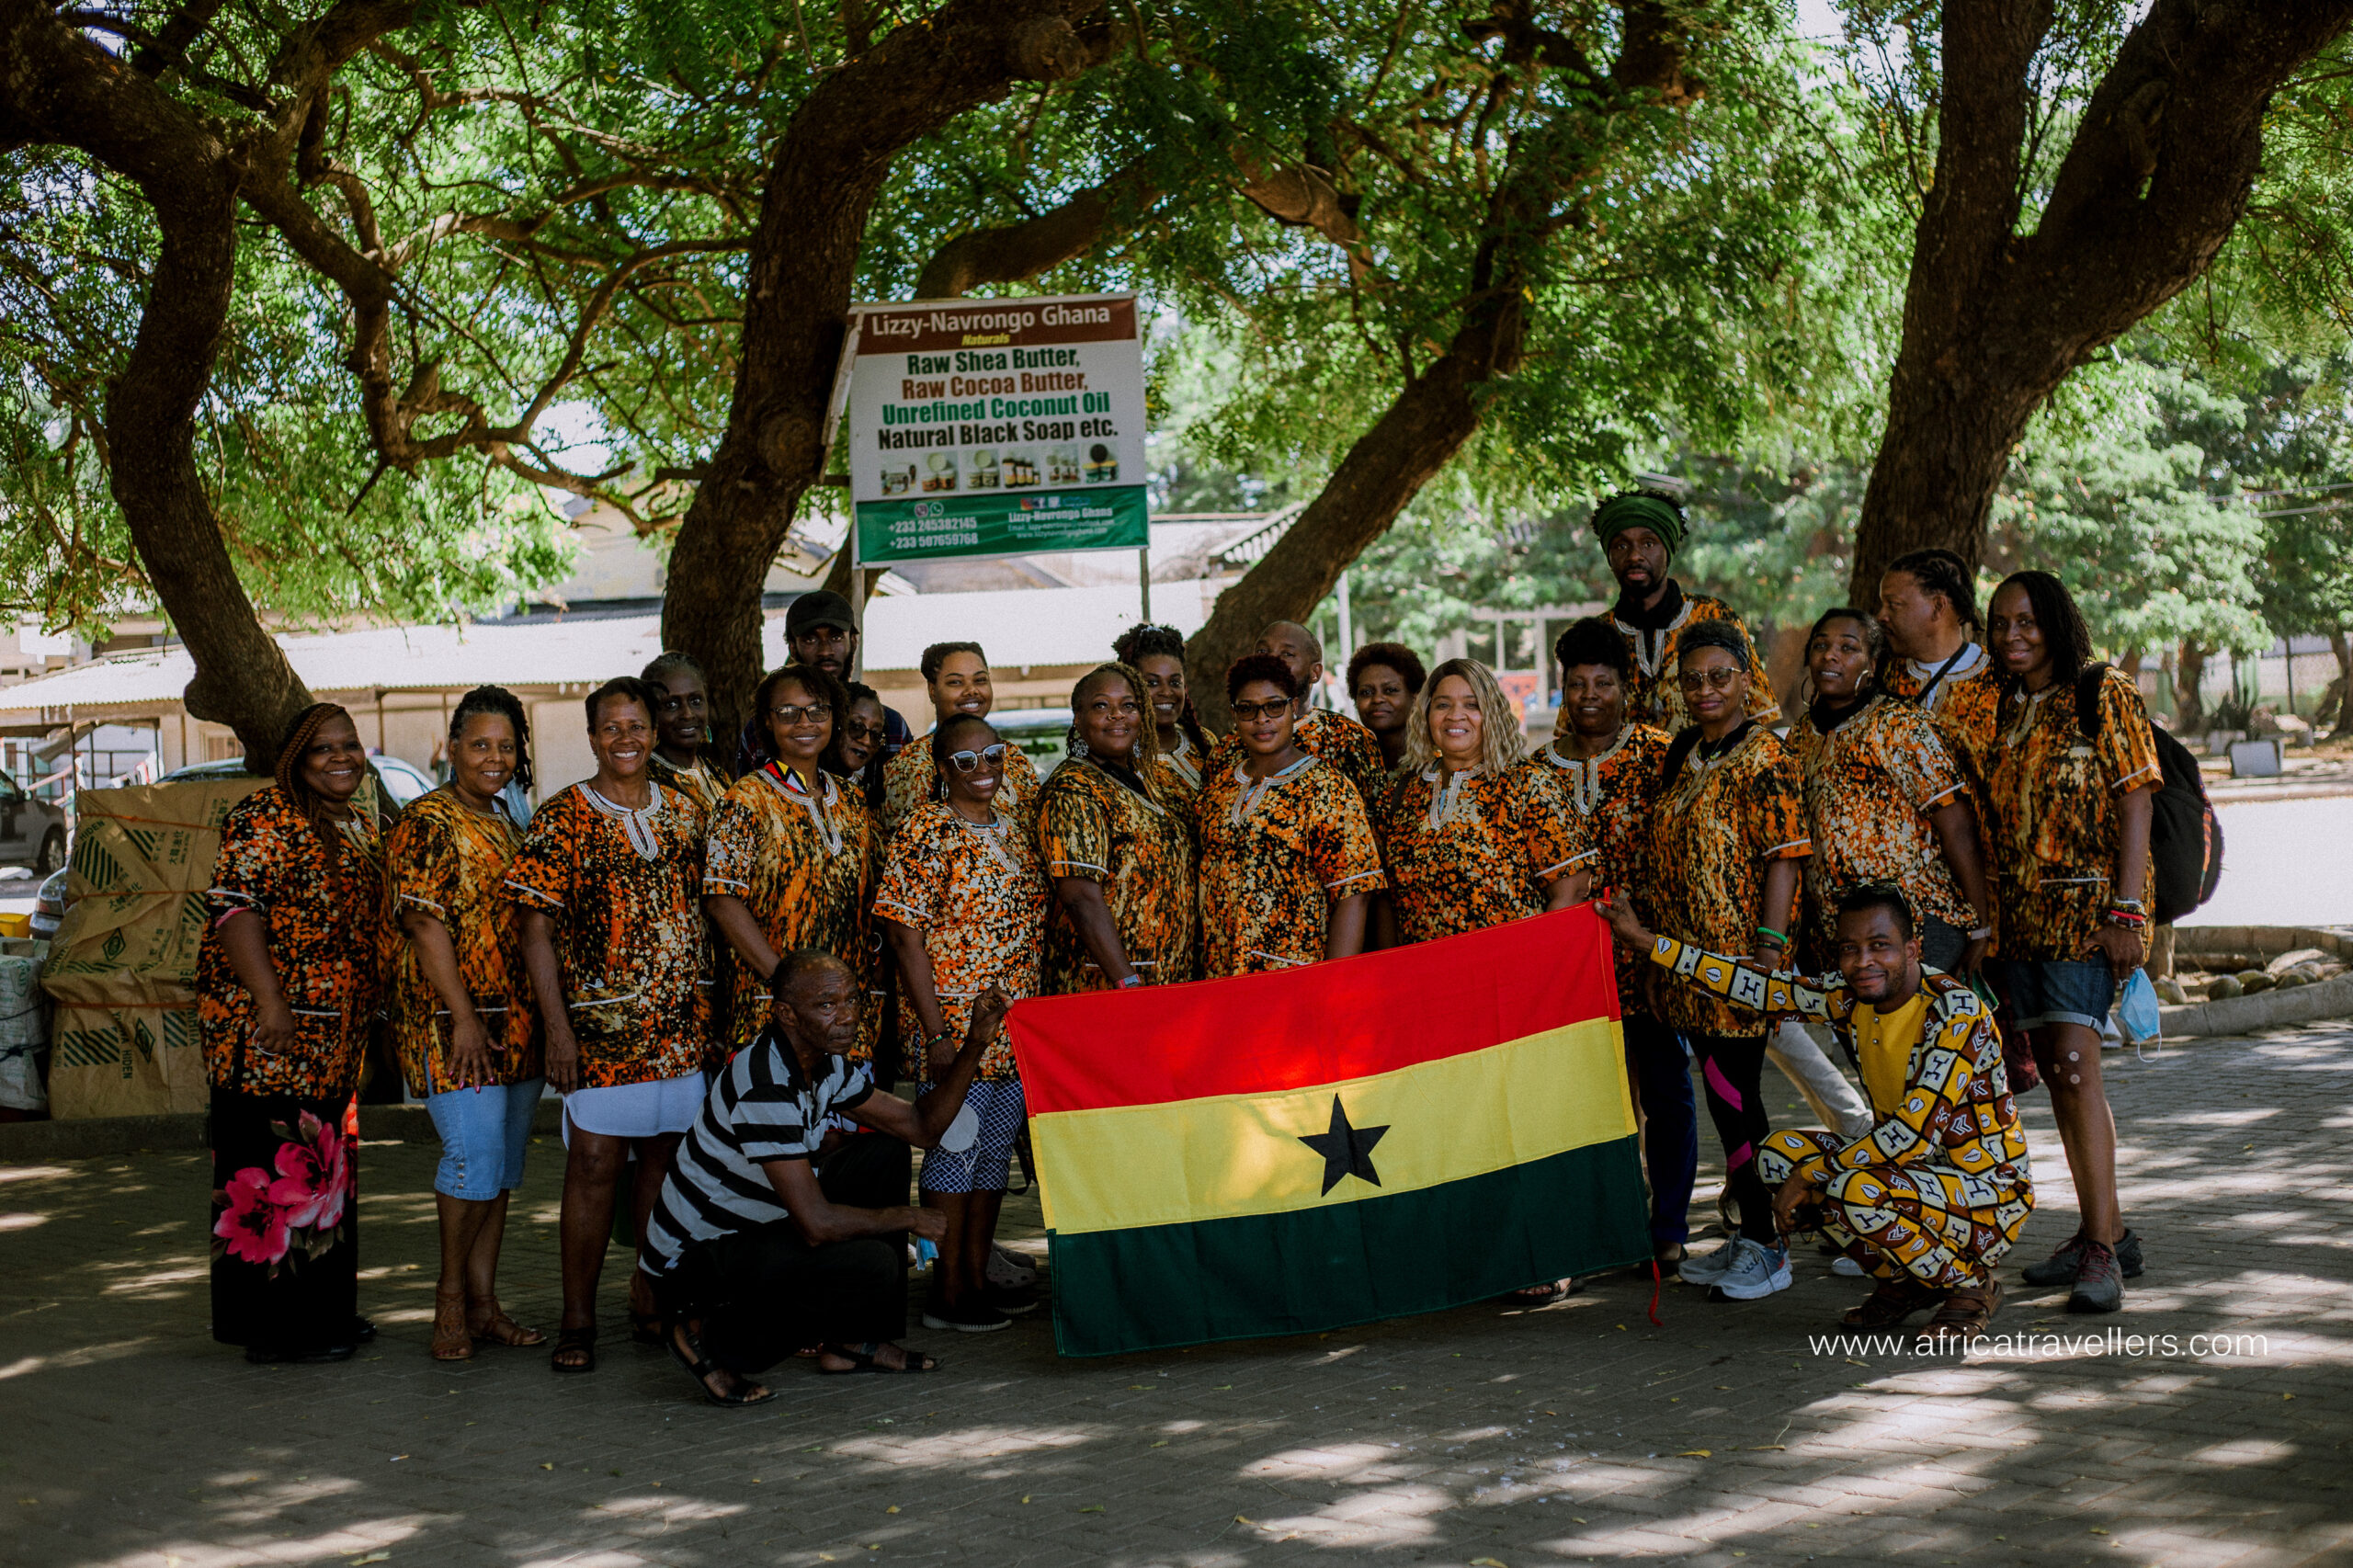 a group of travelers in Ghana art center